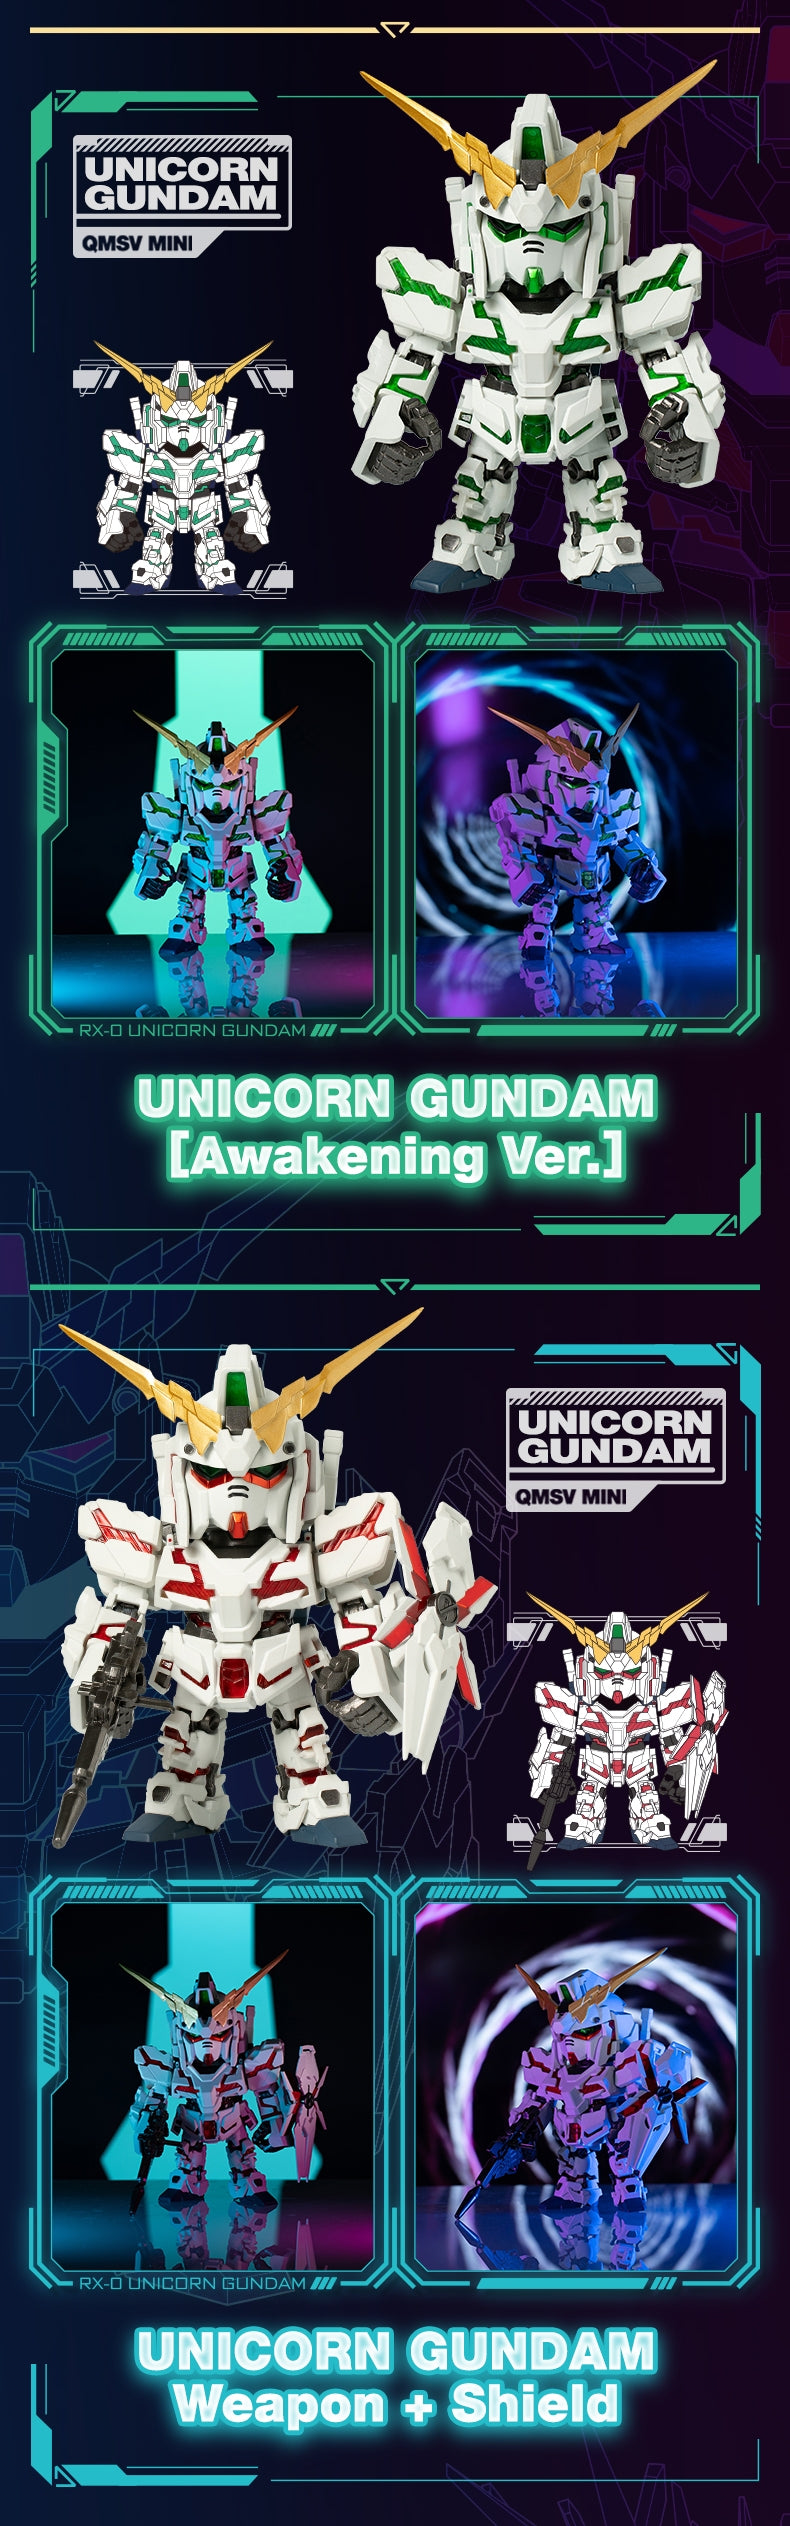 [QSMV-MINI] GUNDAM - Unicorn Gundam Series Blind Box